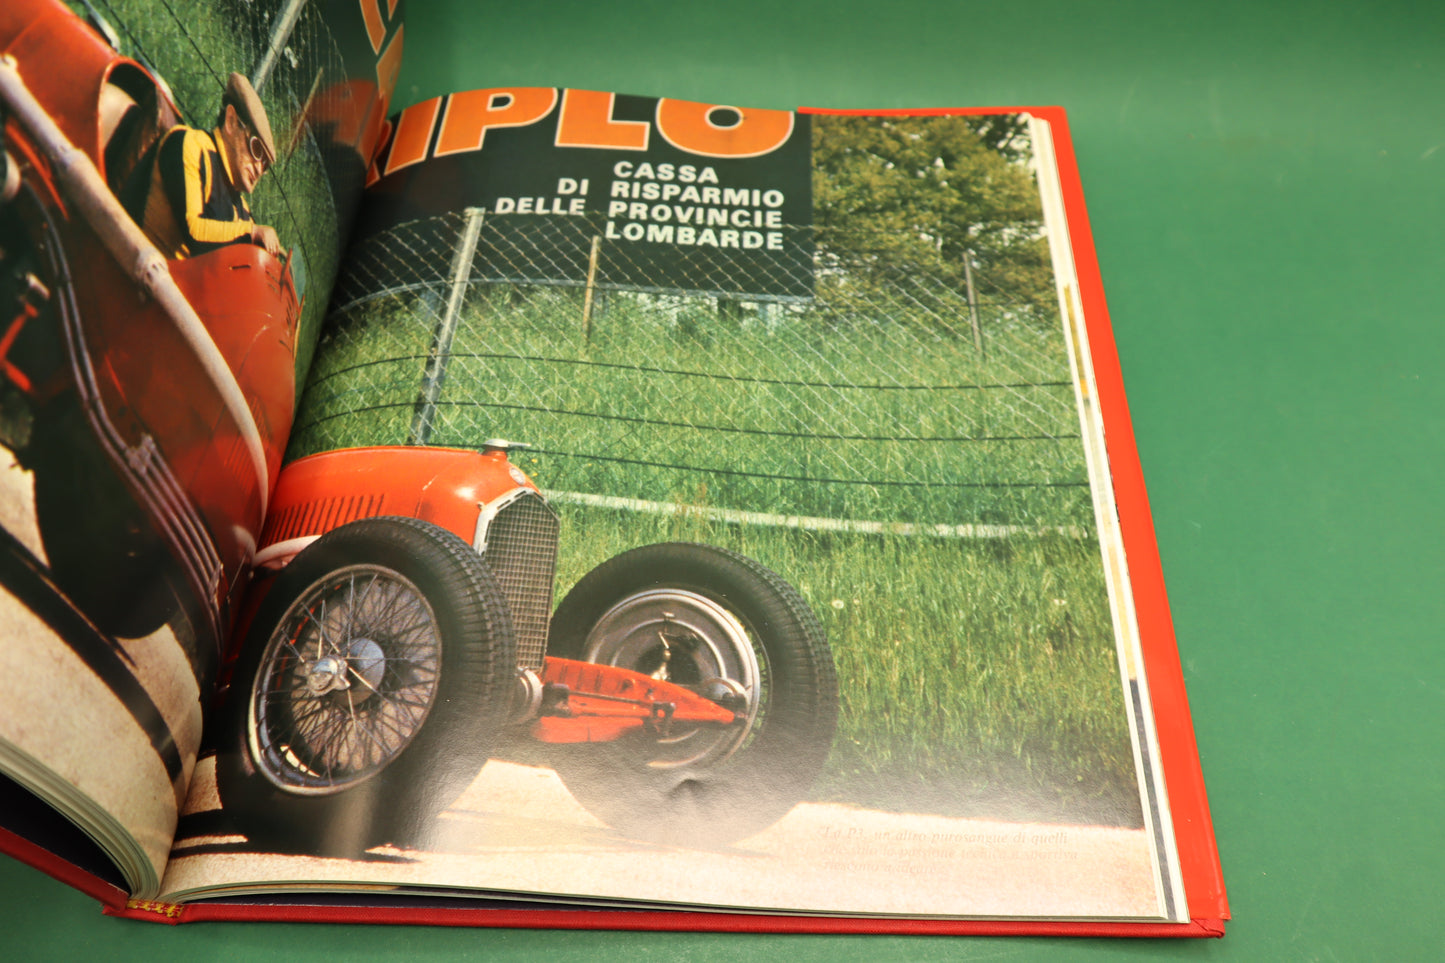 Museo Storico Alfa Romeo Libro ARESE 1983